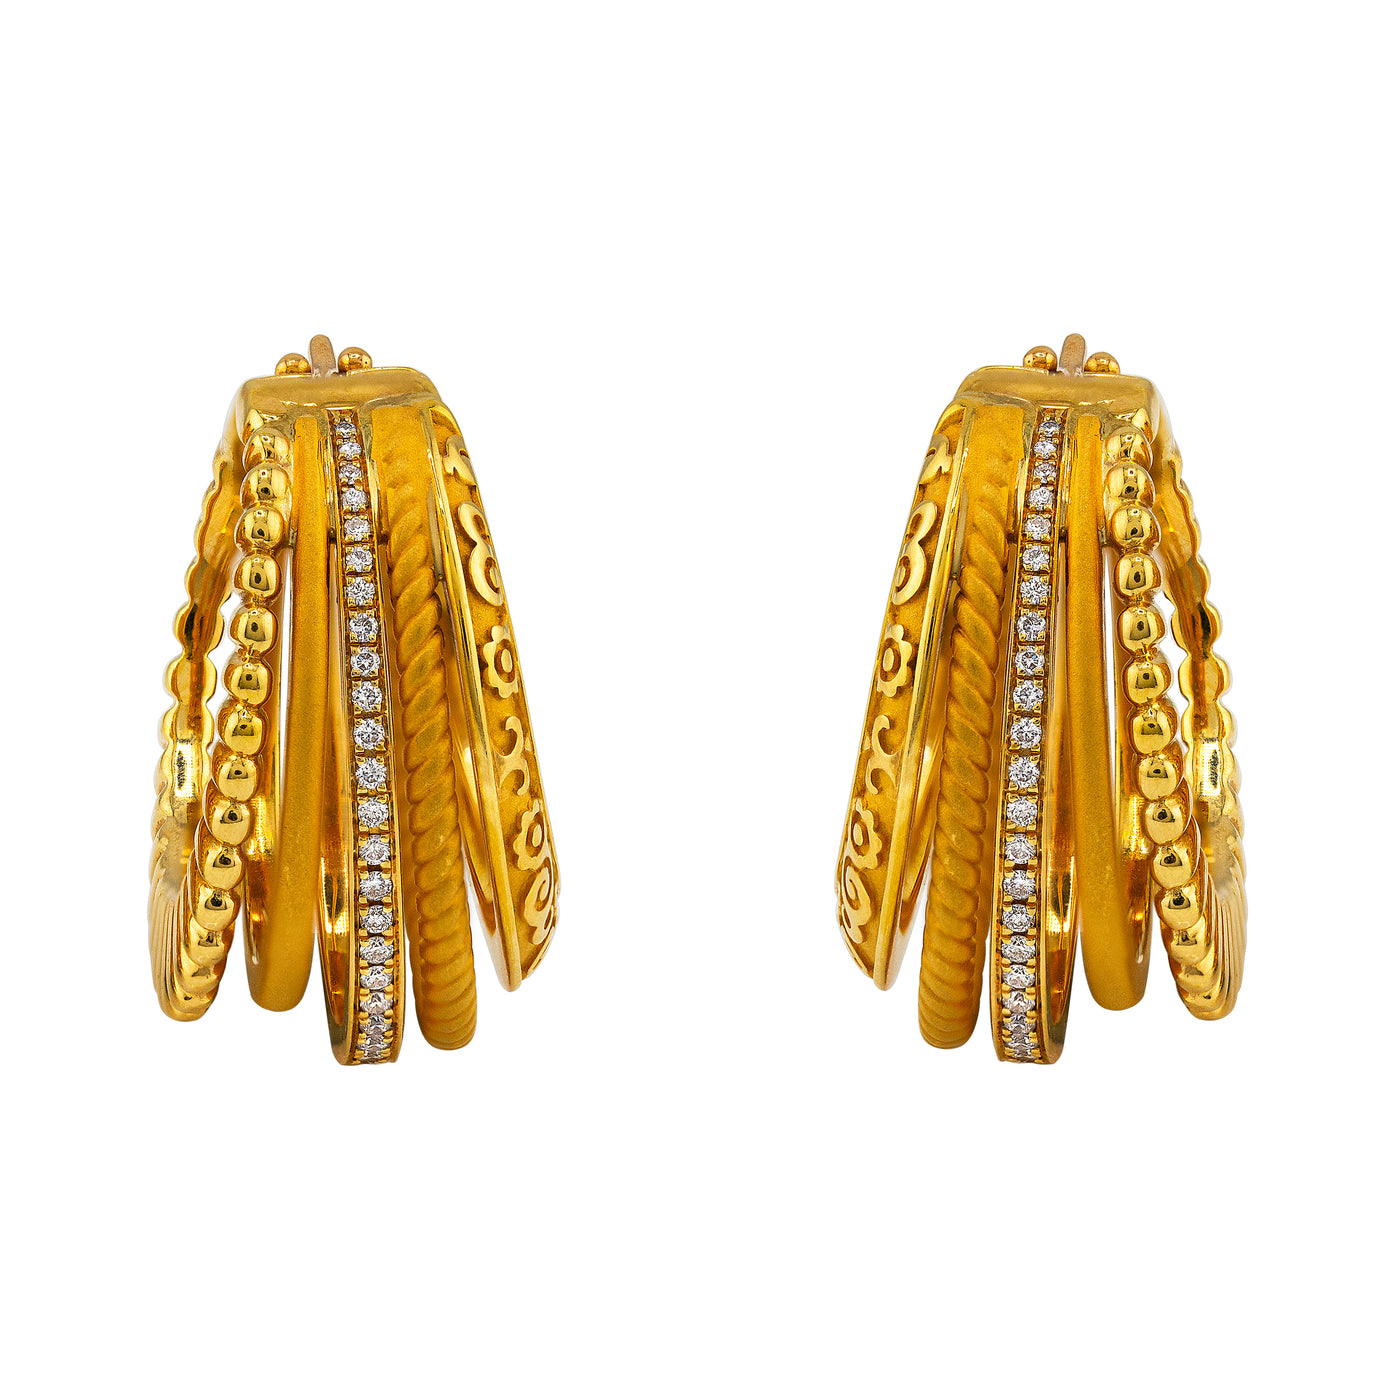 Carrera Y Carrera 18K Yellow Gold Diamond Earrings 0.21ct. tw